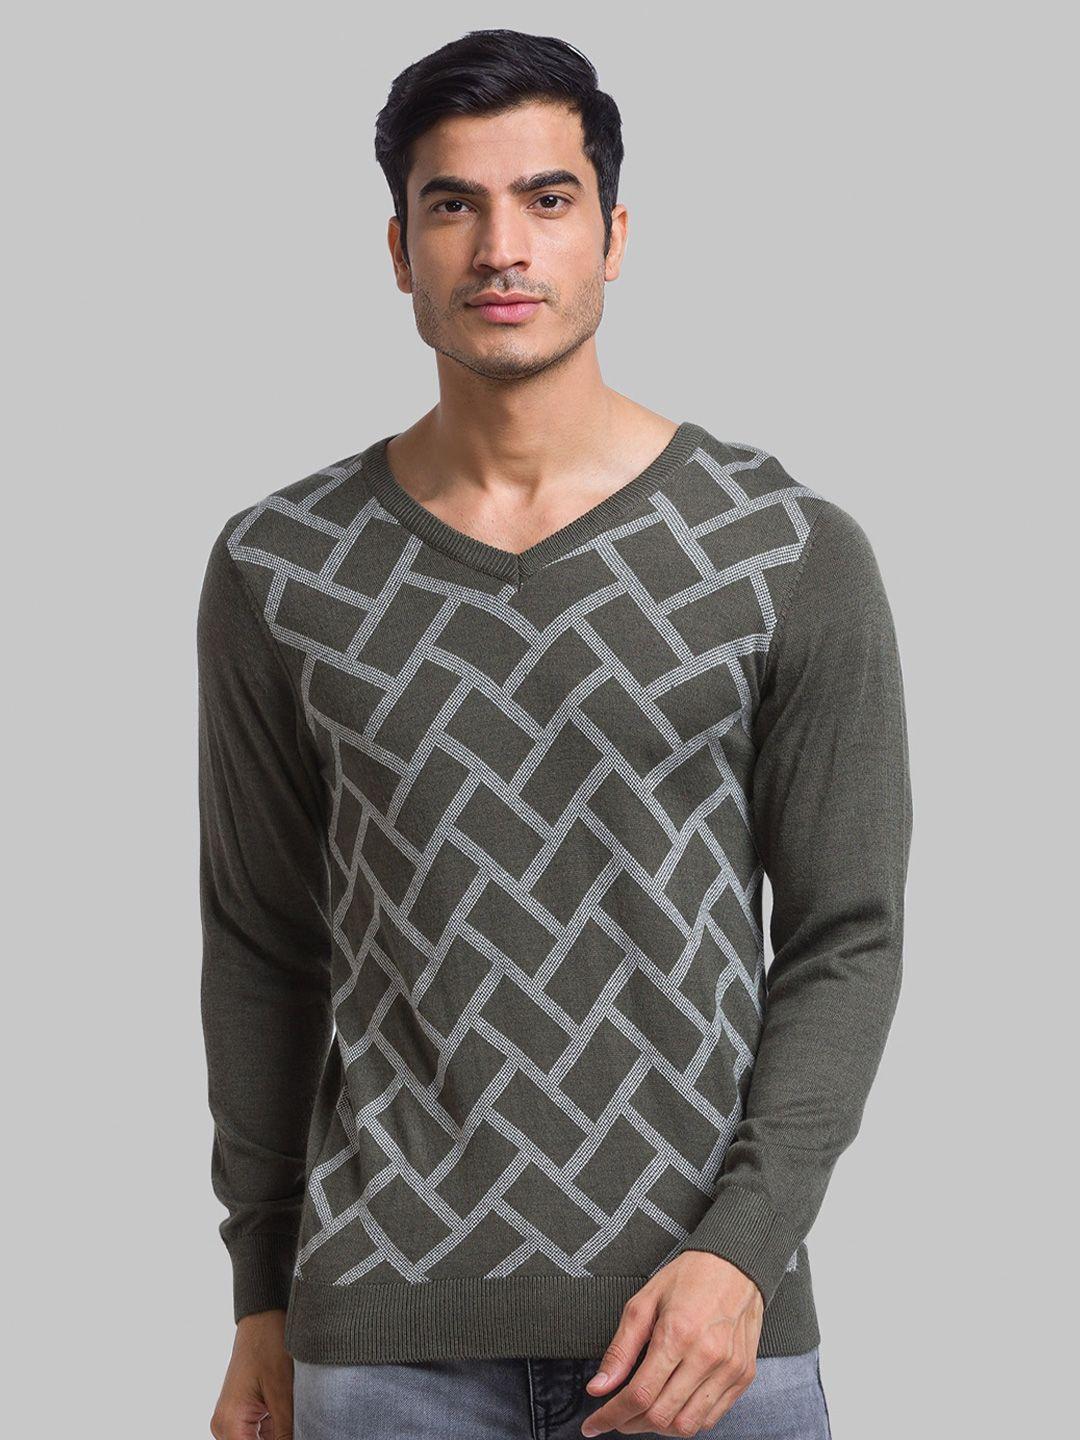 parx-men-chevron-printed-acrylic-cardigan-sweater